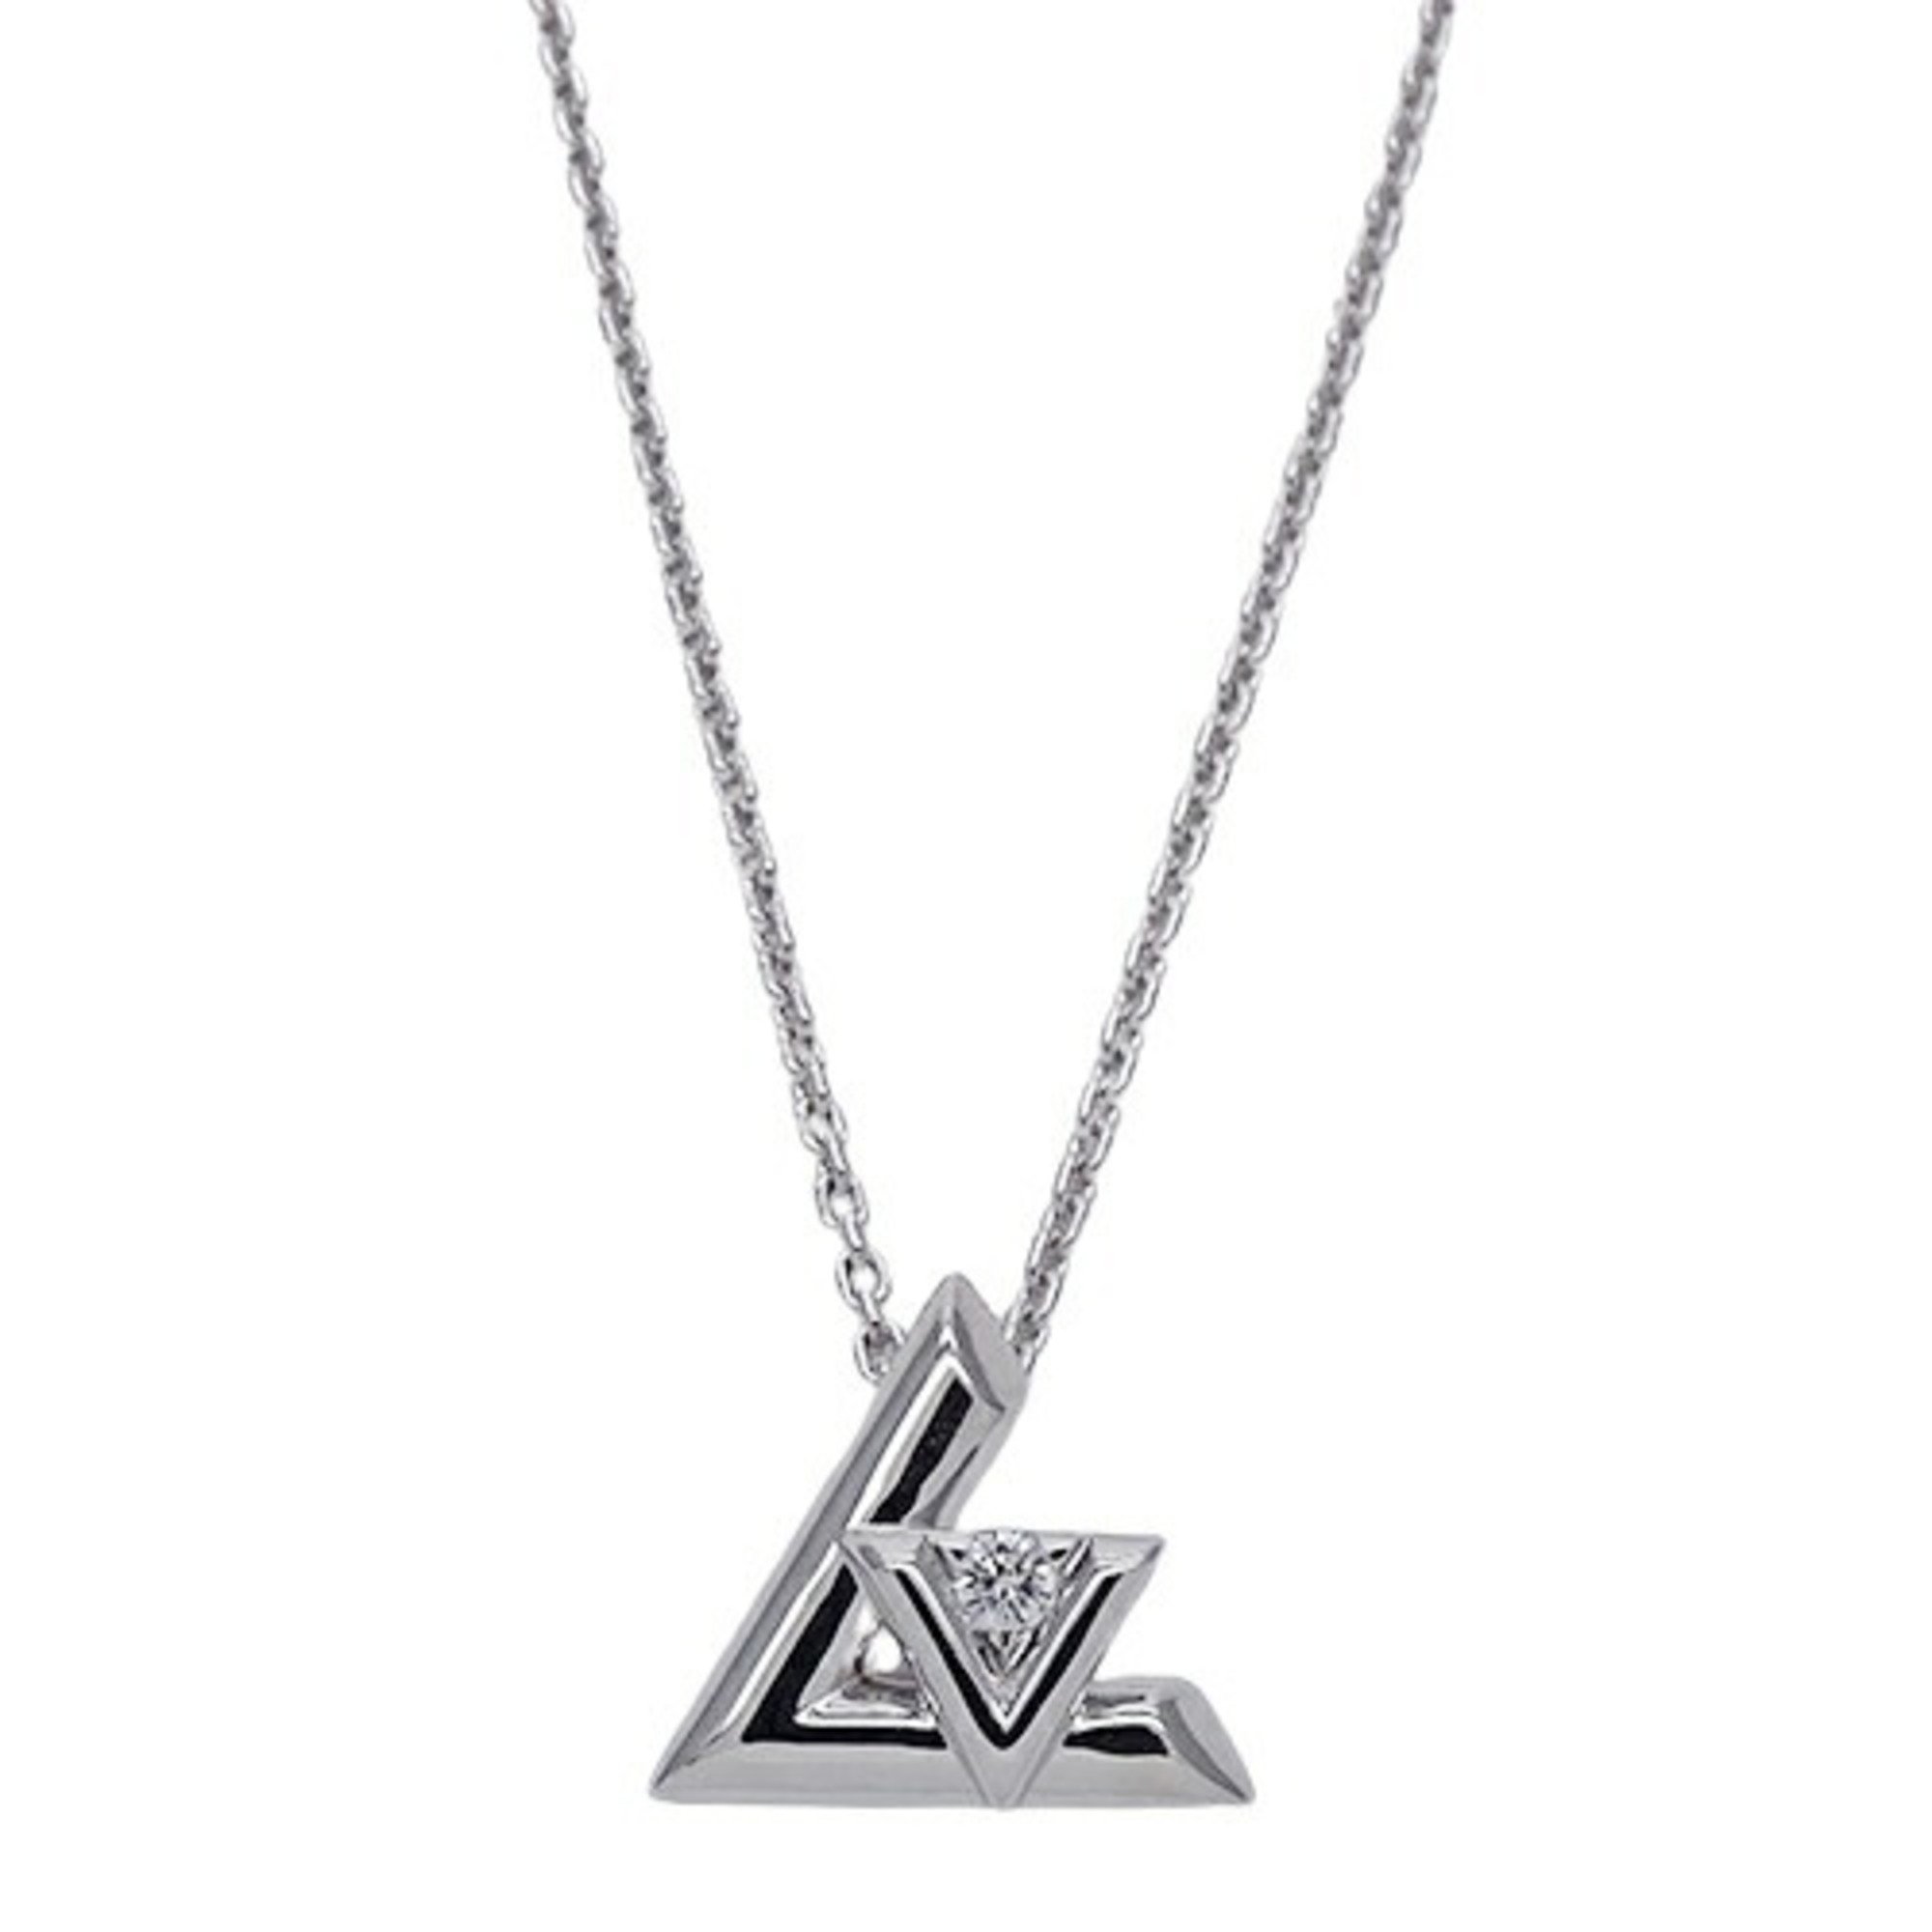 LOUIS VUITTON Necklace for Women 750WG Diamond Indantif LV Volt One PM White Gold Q93806 Polished